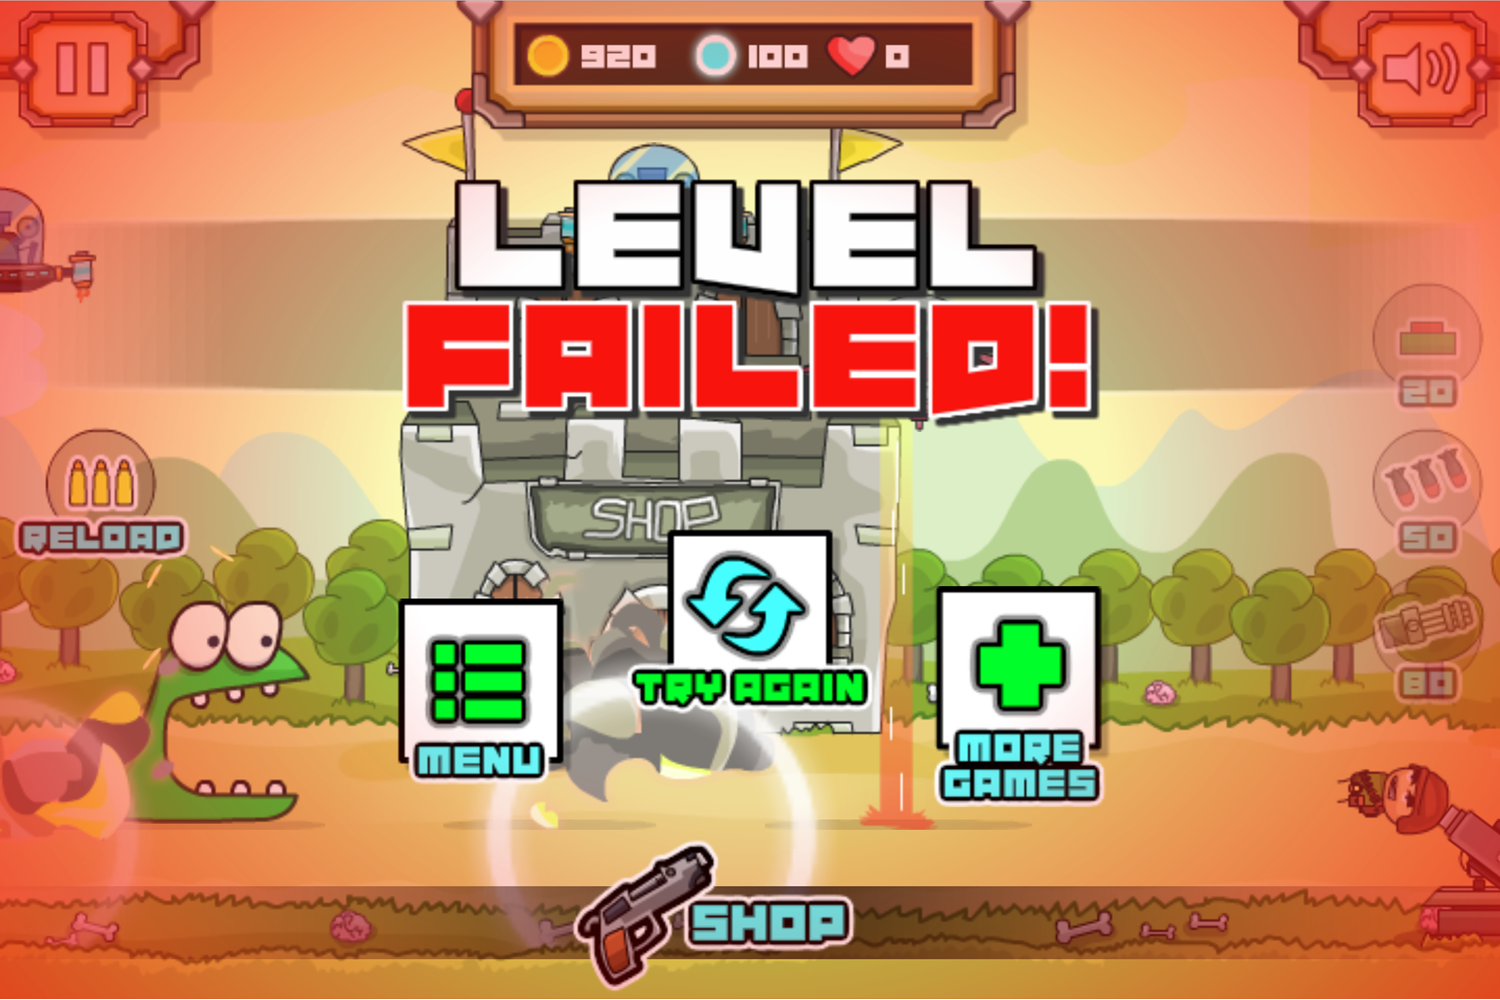 Soldier Legend Game Level Failed Screen Screenshot.